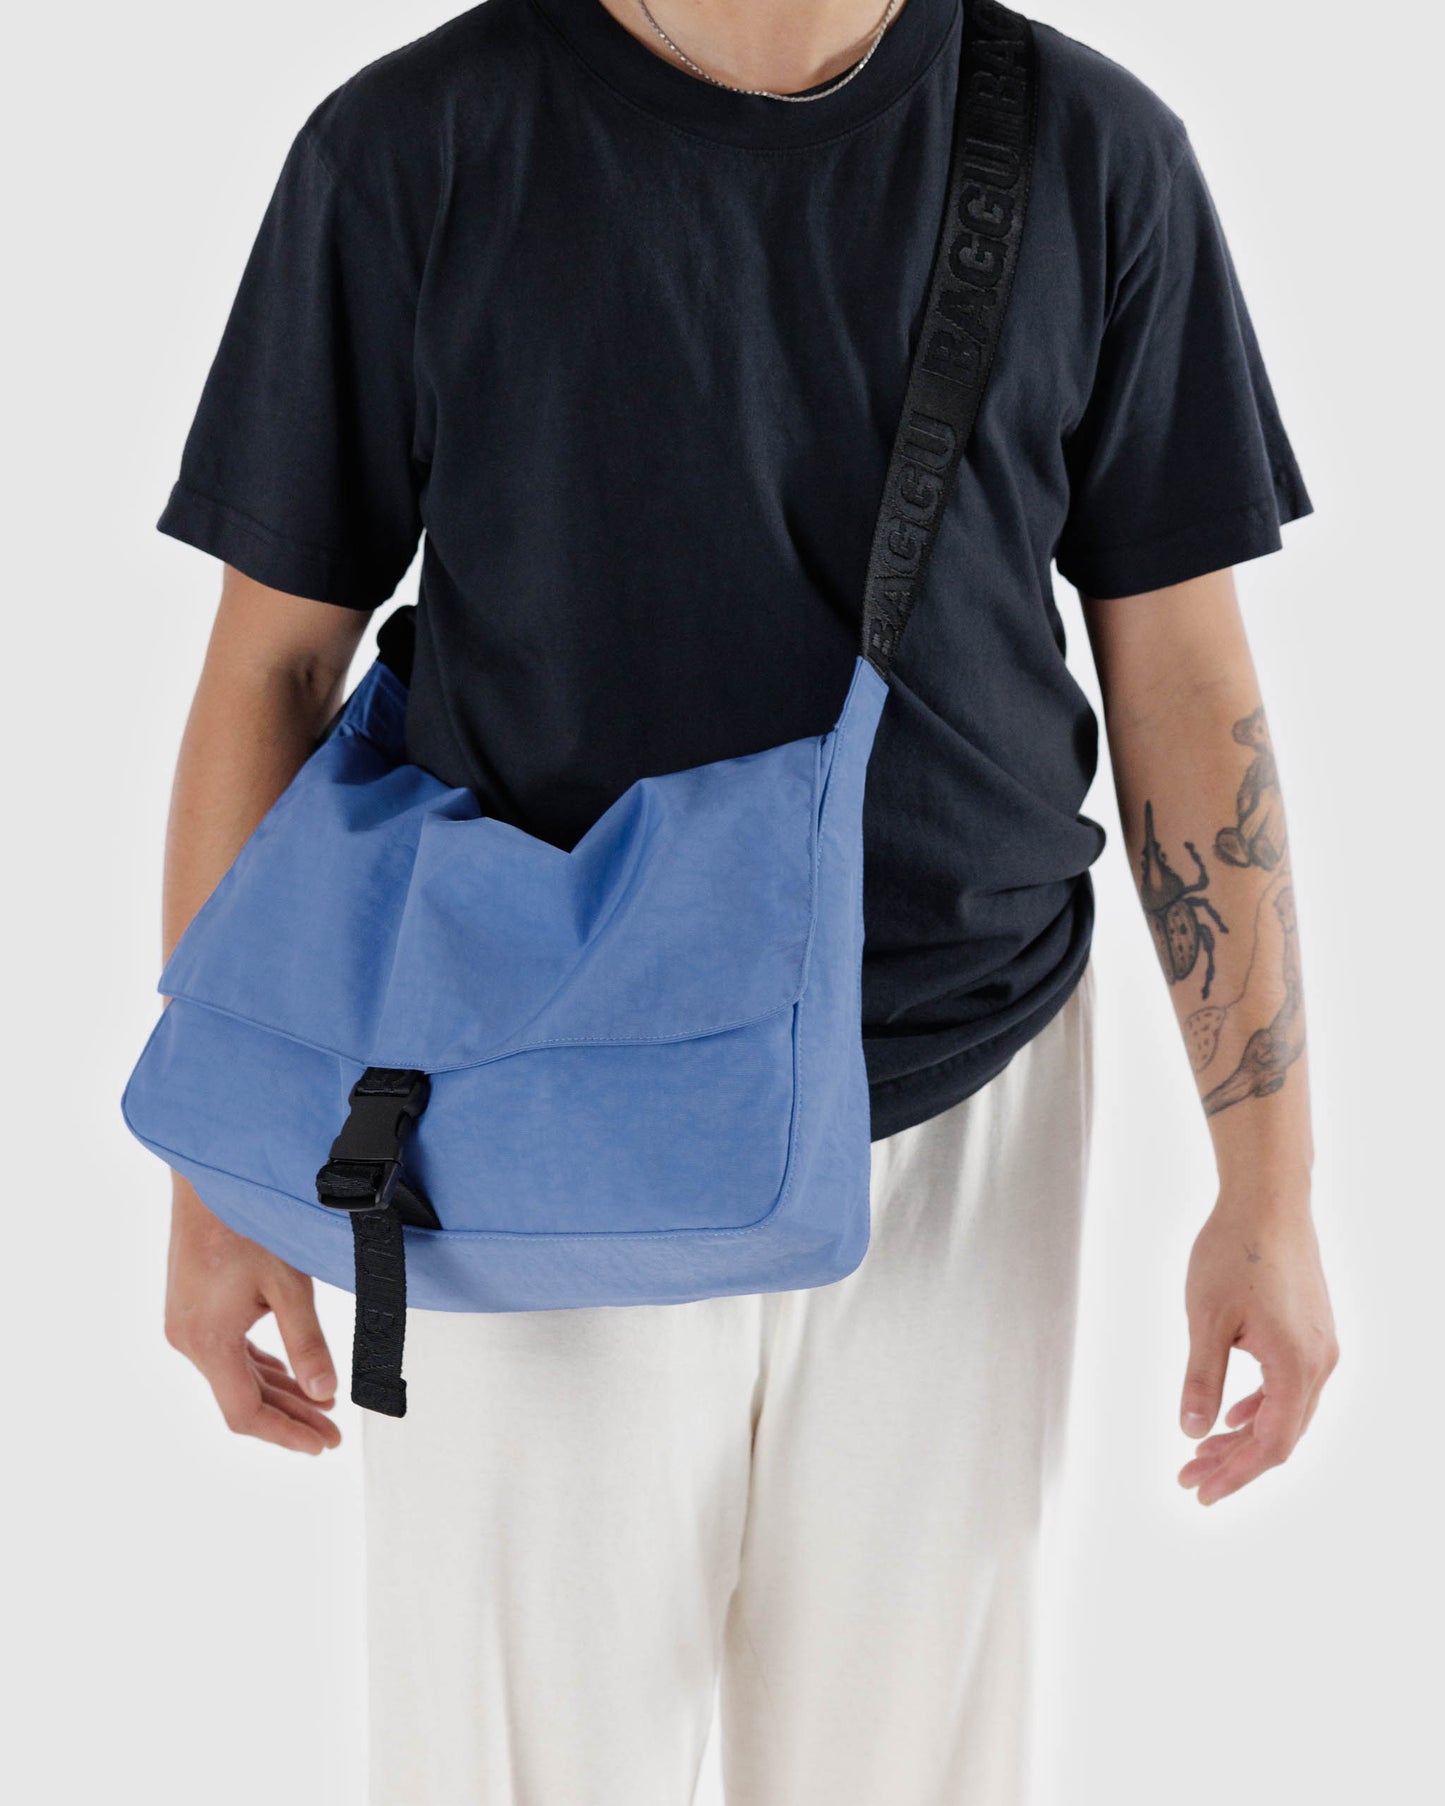 BAGGU Nylon Messenger Bag - Pansy Blue